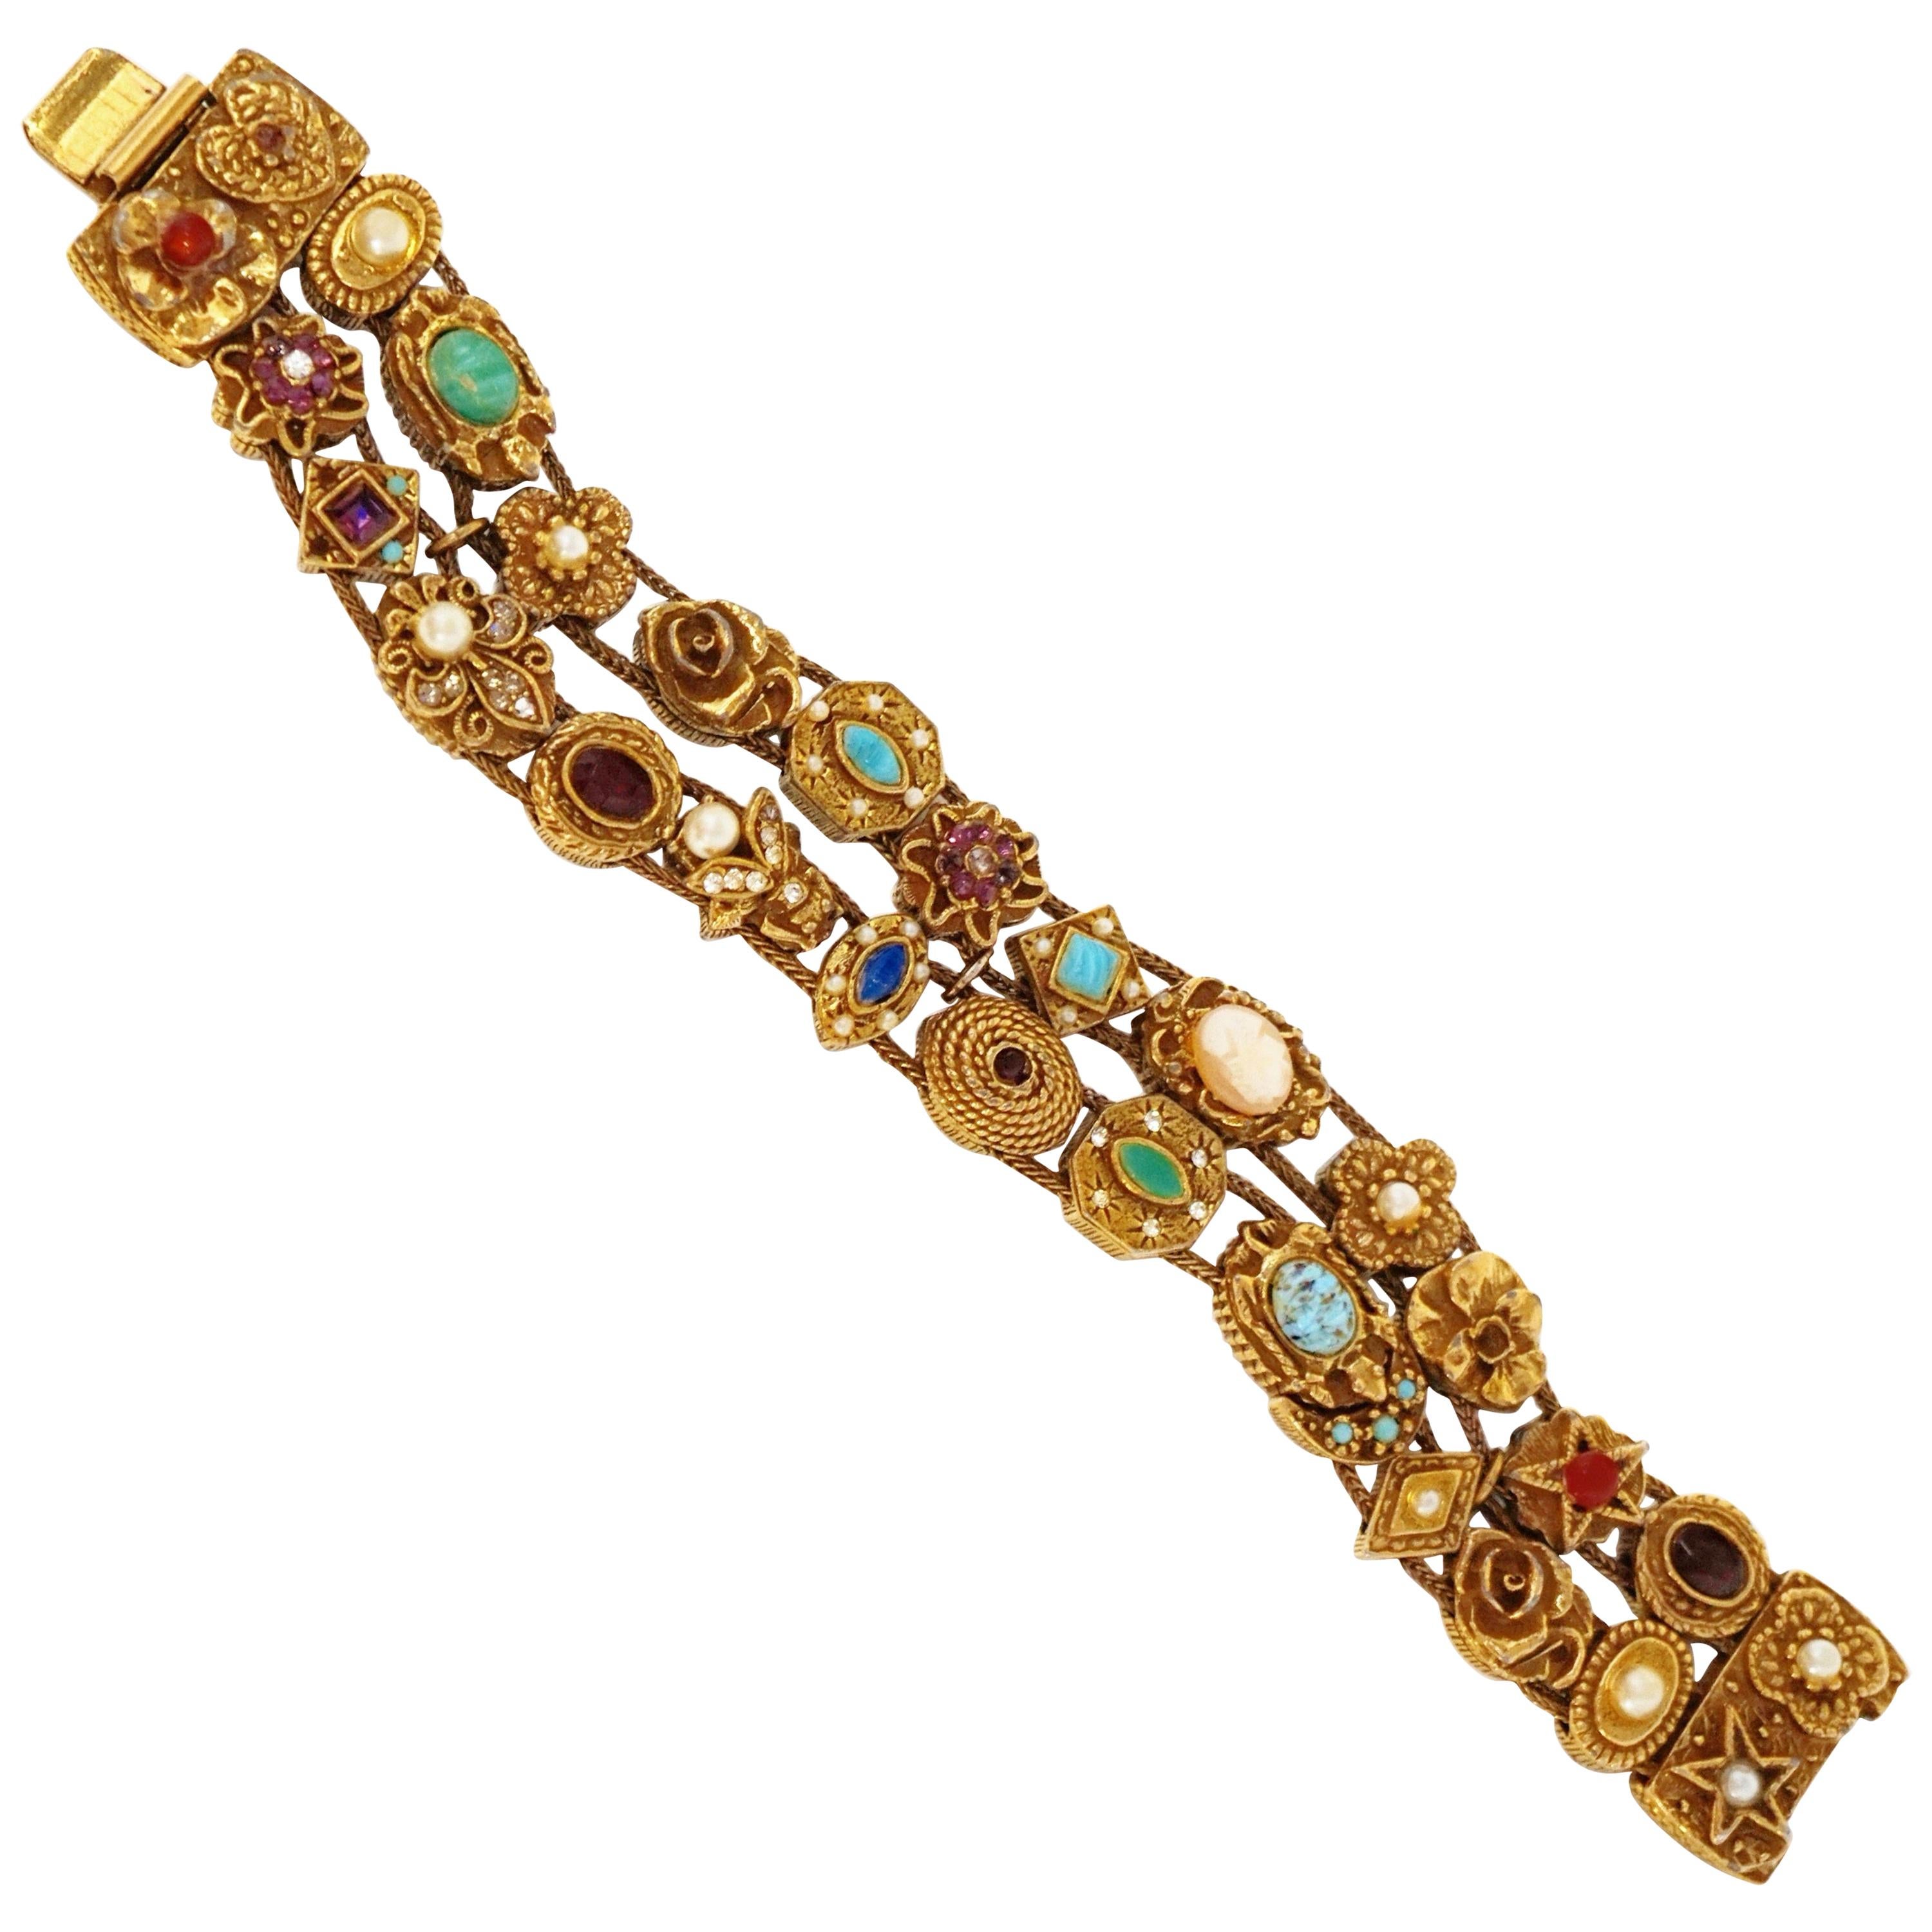 1960s Goldette Victorian Revival Double Row Slider Charm Bracelet, Signed